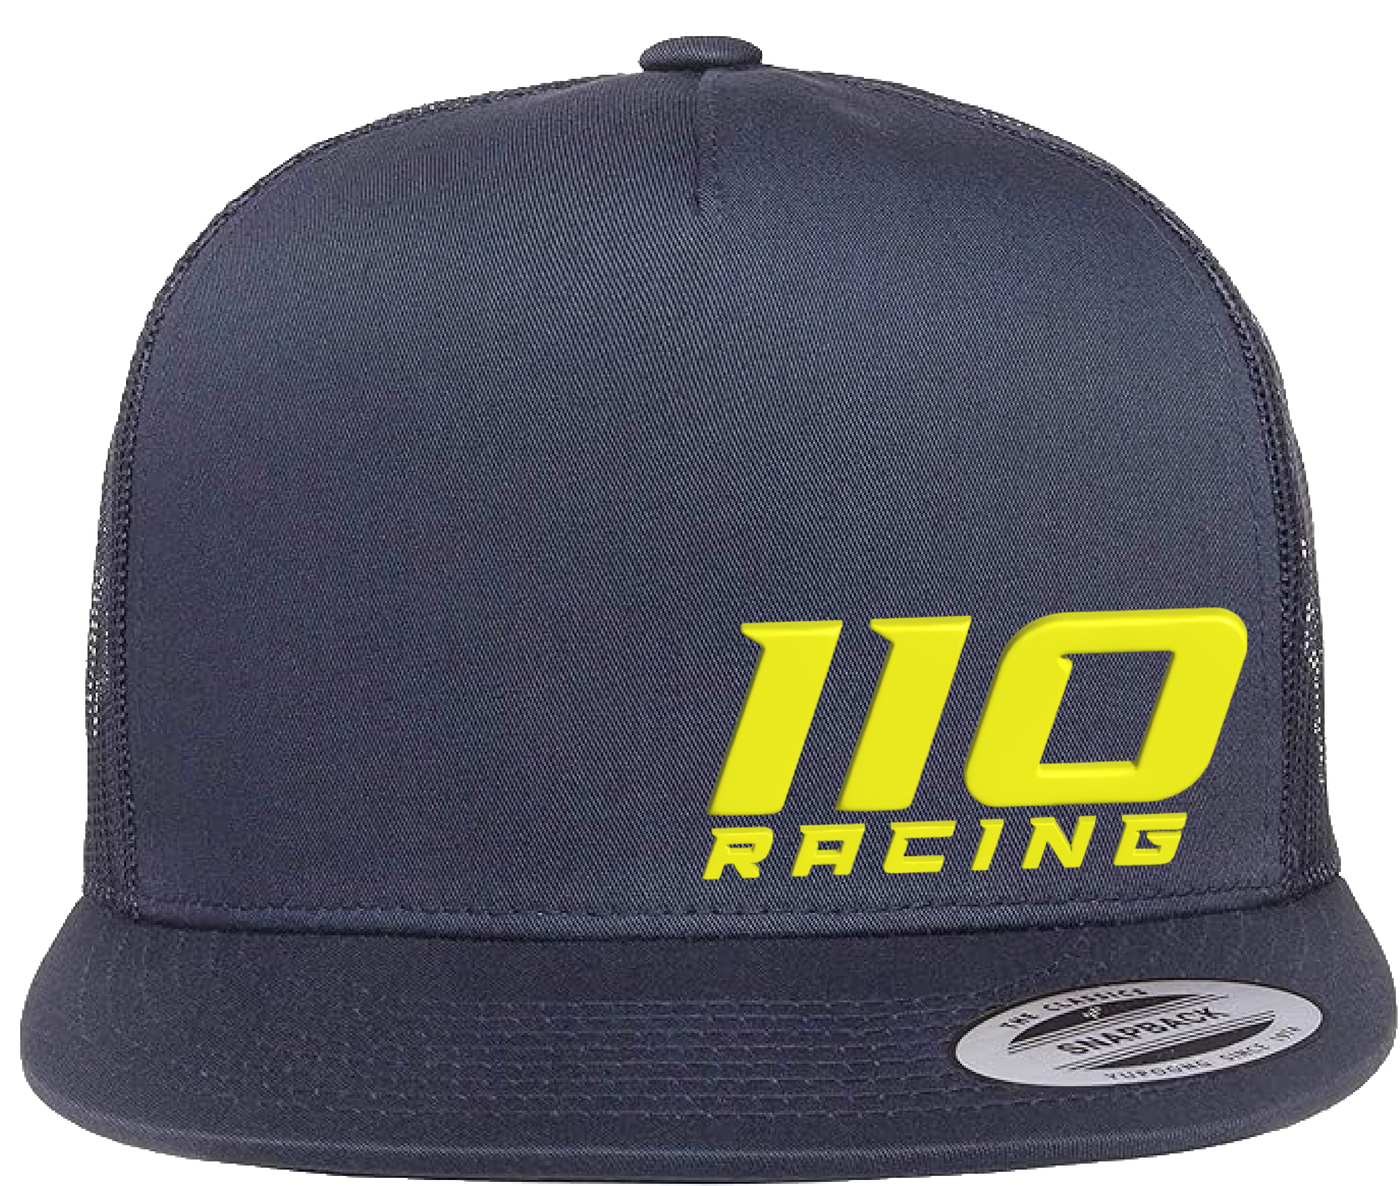 110 RACING // SNAPBACK NAVY 1.0 HAT